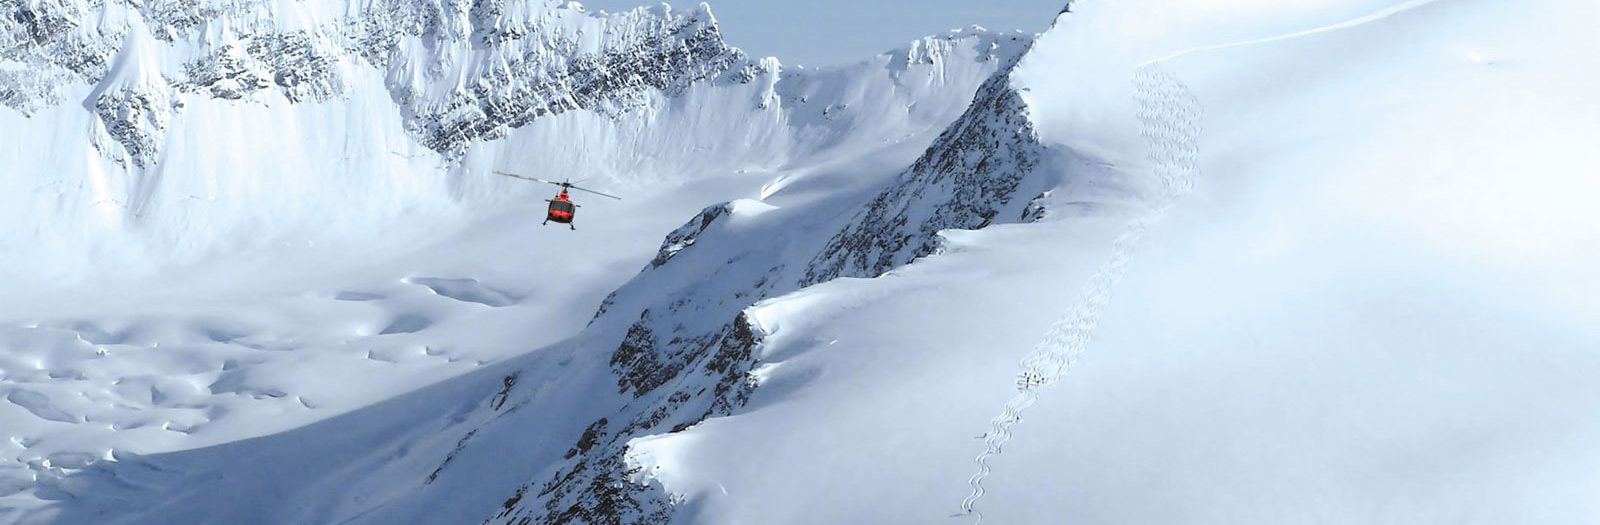 rk heli skiing, panorama heli skiing, british columbia heli skiing